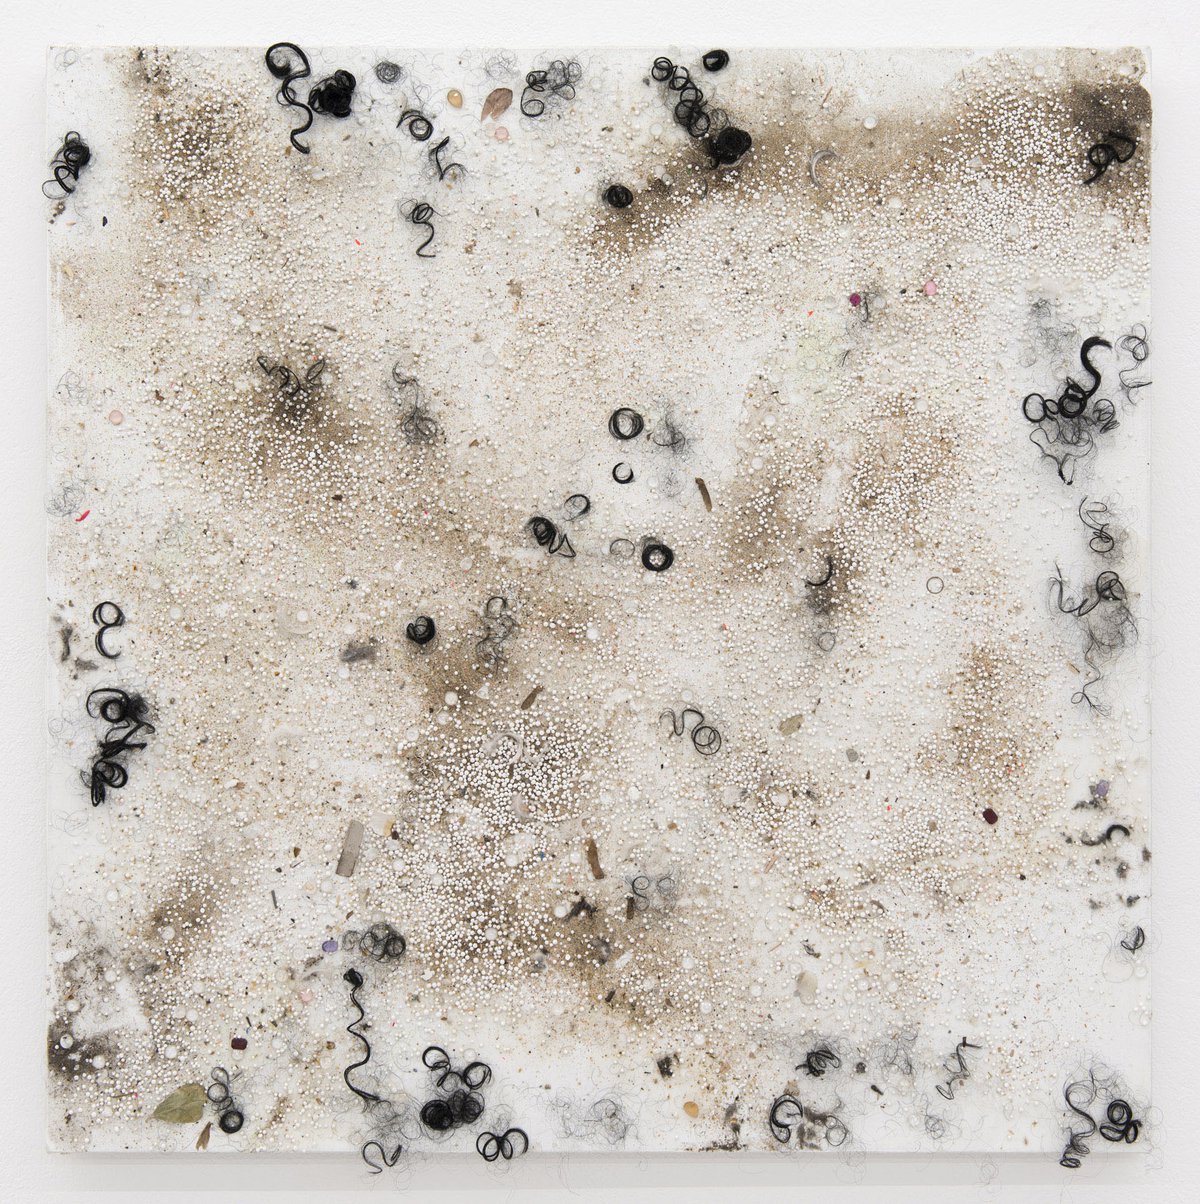 Heimo ZobernigUntitled, 2013Swarovski crystals, sweepings, synthetic hair, styrofoam, acrylic binder, acrylic on canvas100 x 100 cm